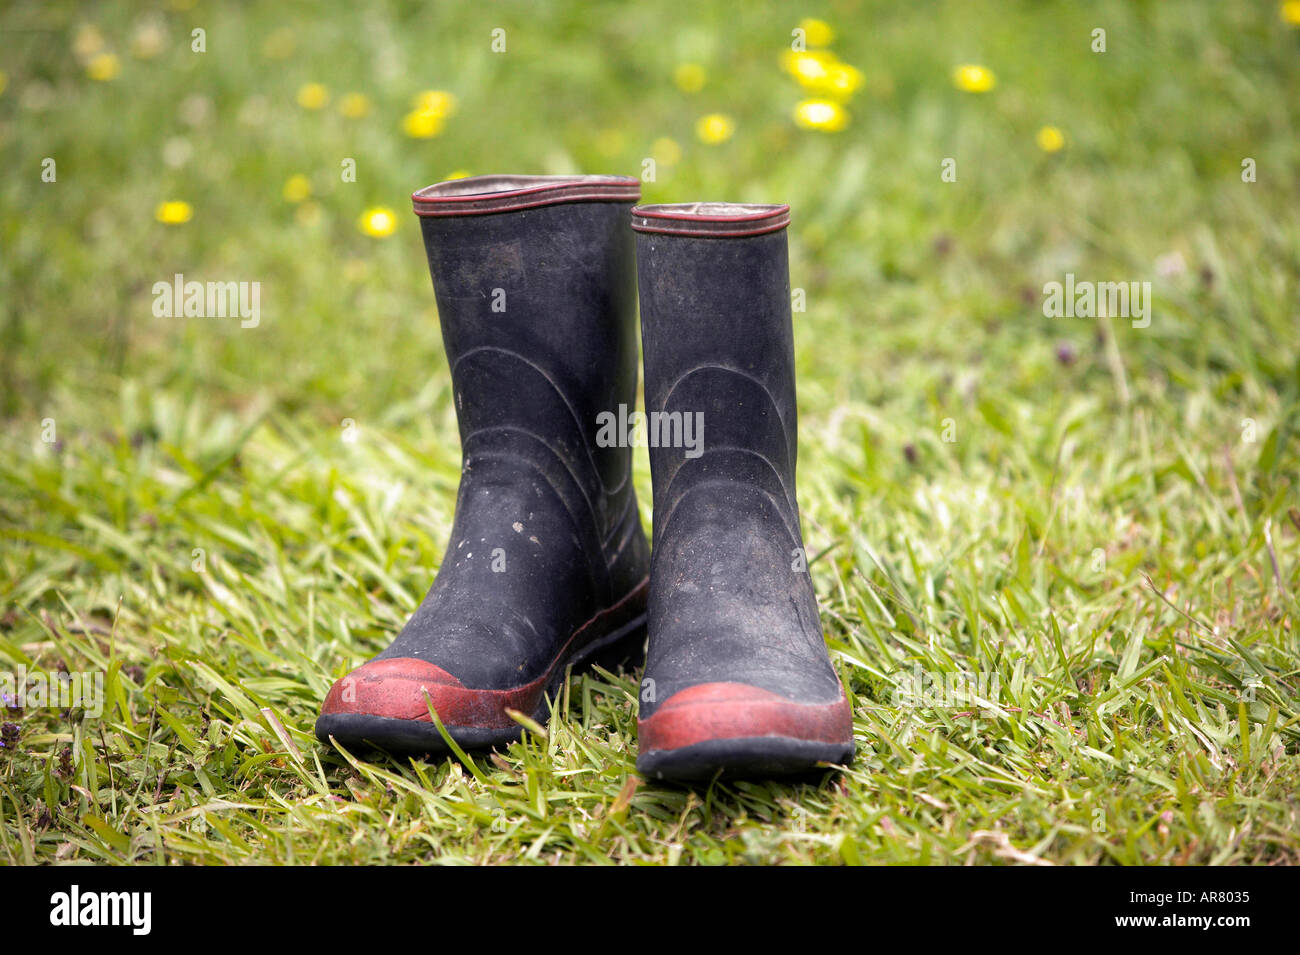 muddy gumboots in grass Stock Photo - Alamy